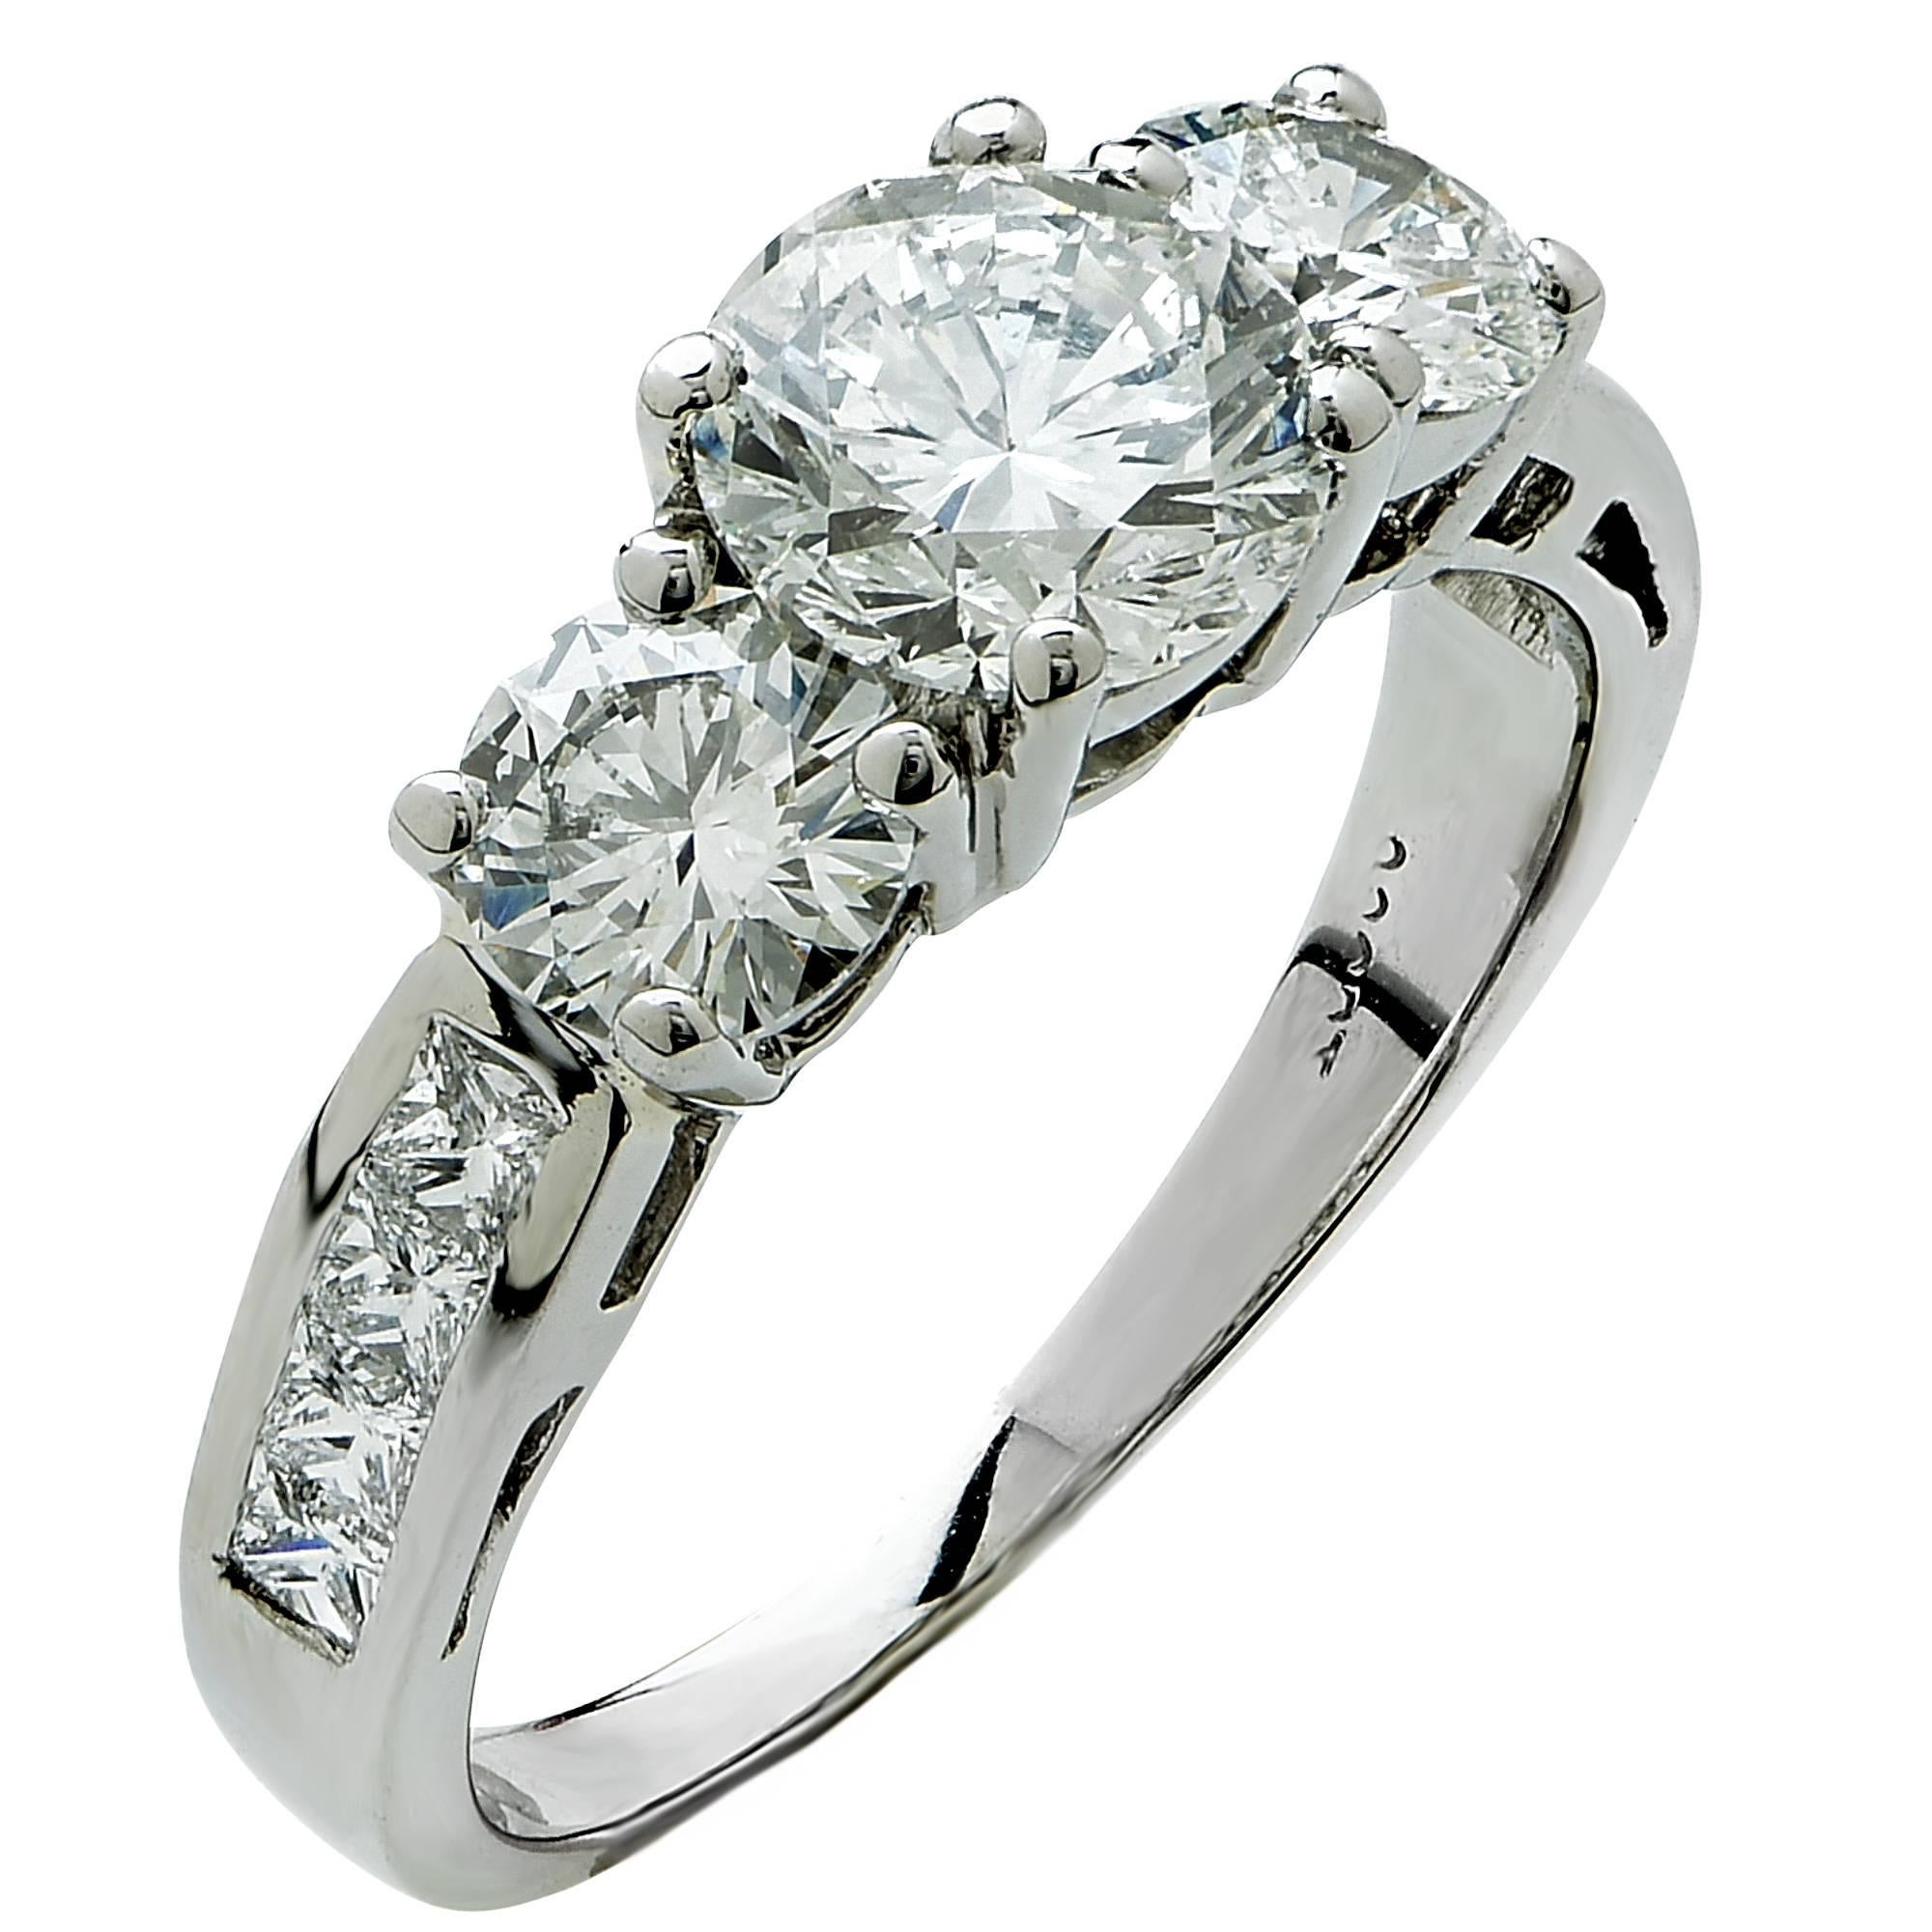 1.38 Carat Diamond Engagement Ring